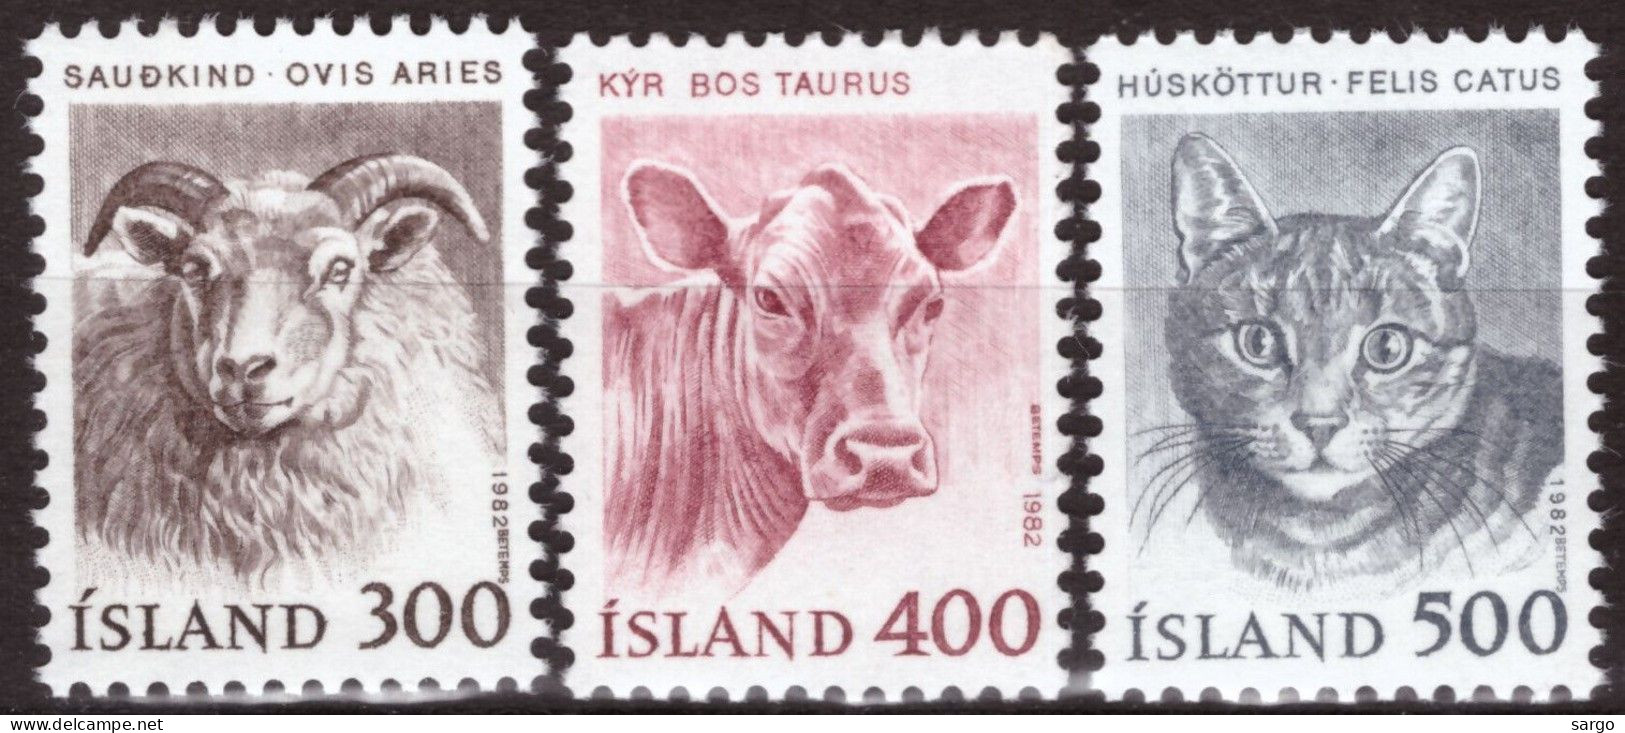 ICELAND  - 1982 -  FAUNA - ANIMALS -  3 V - MNH - SHEEP - CROW - CAT - - Ferme